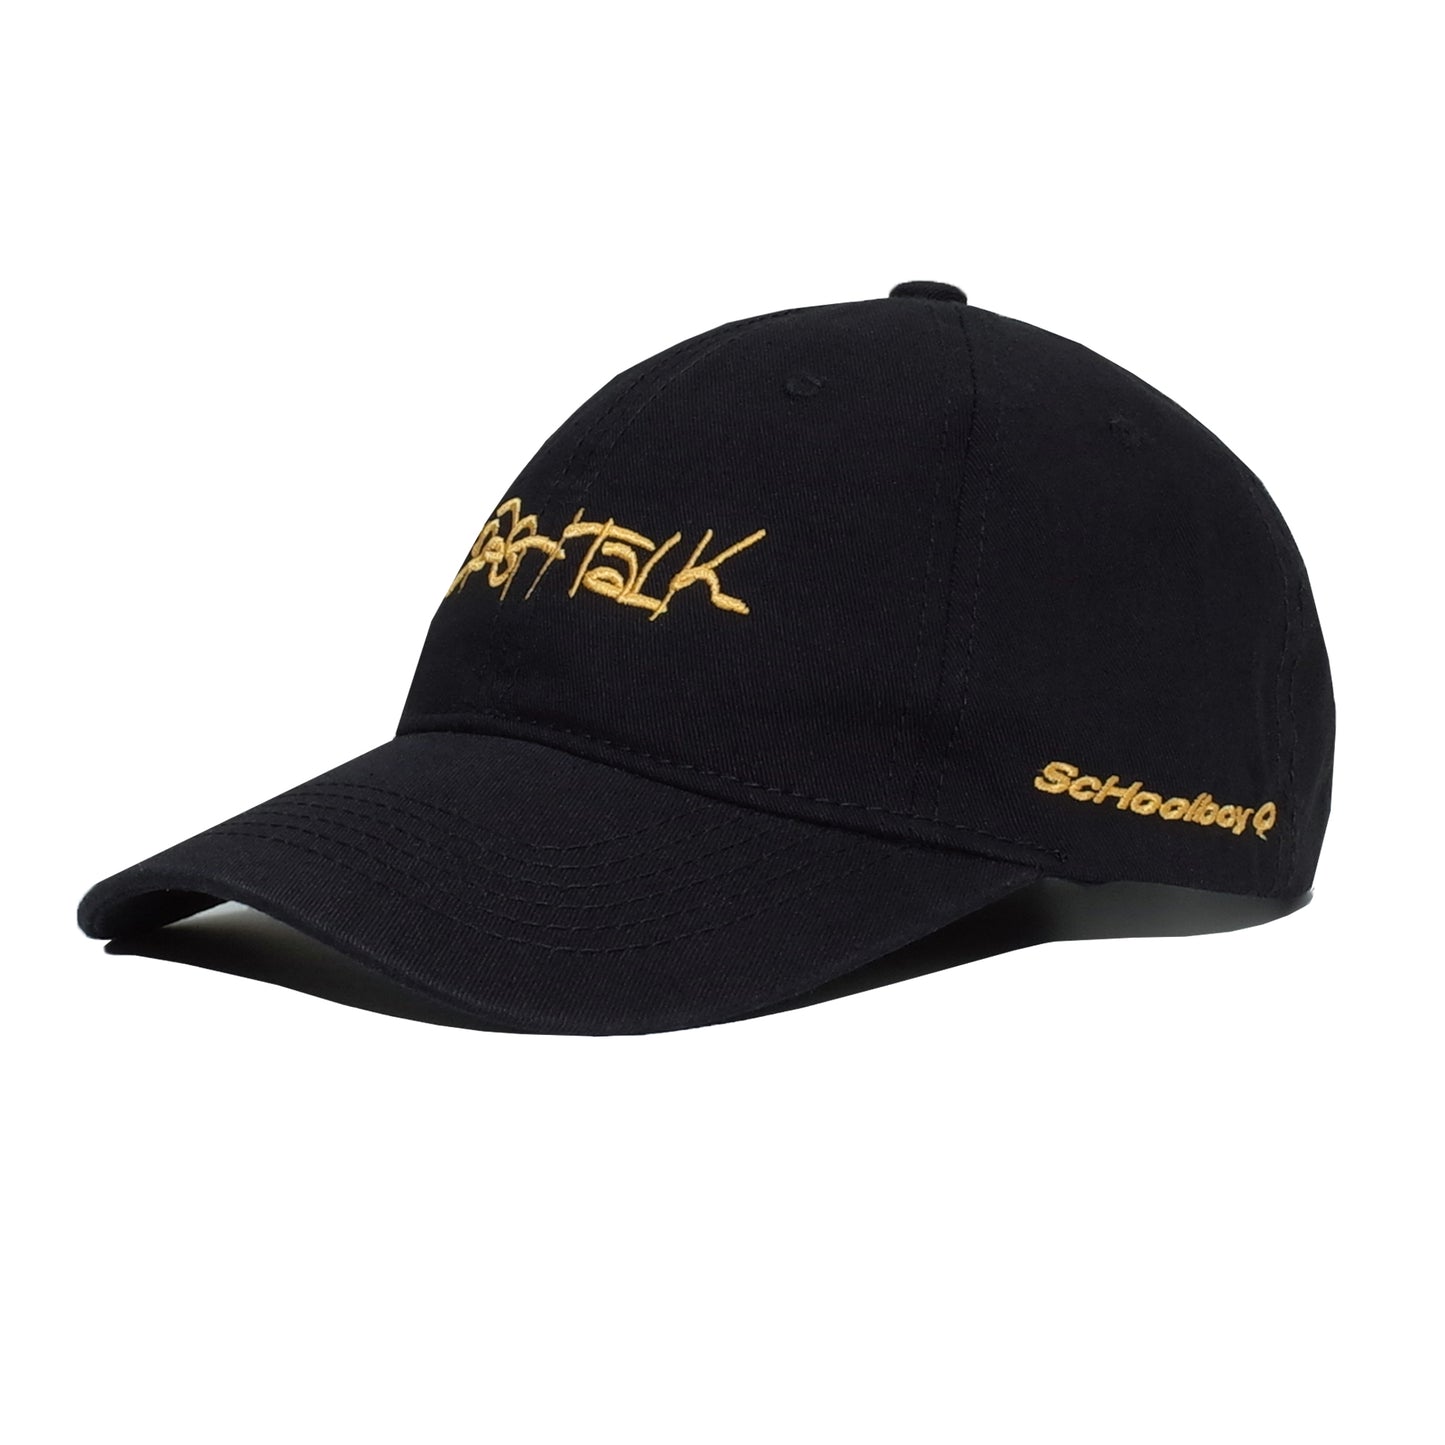 CrasHtalk Hat (Black)